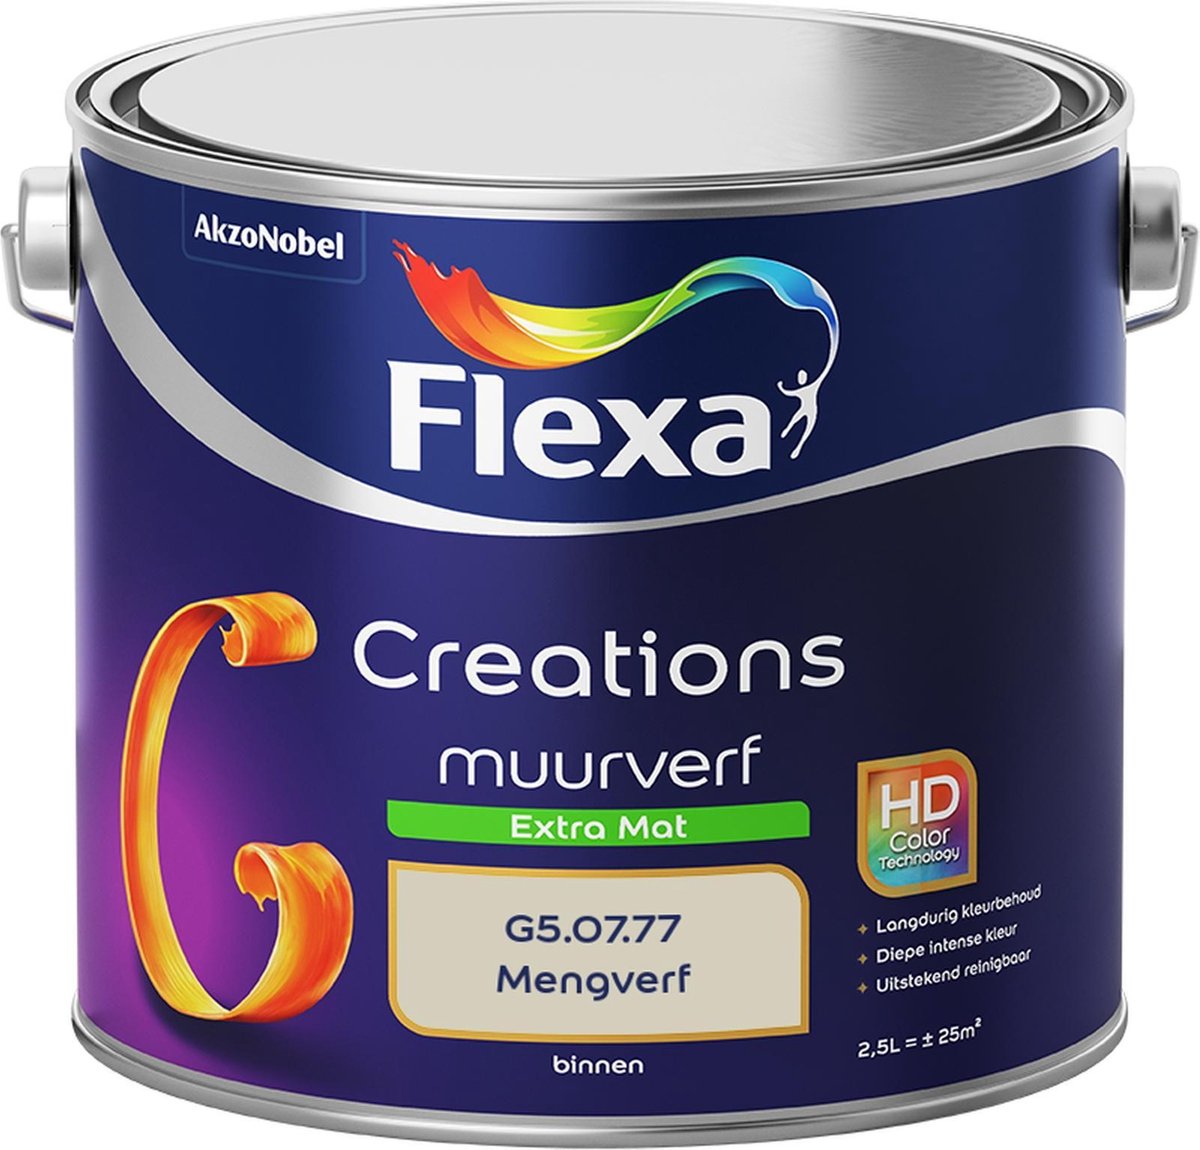 Flexa Creations Muurverf - Extra Mat - Colorfutures 2019 - G5.07.77 - 2,5 liter